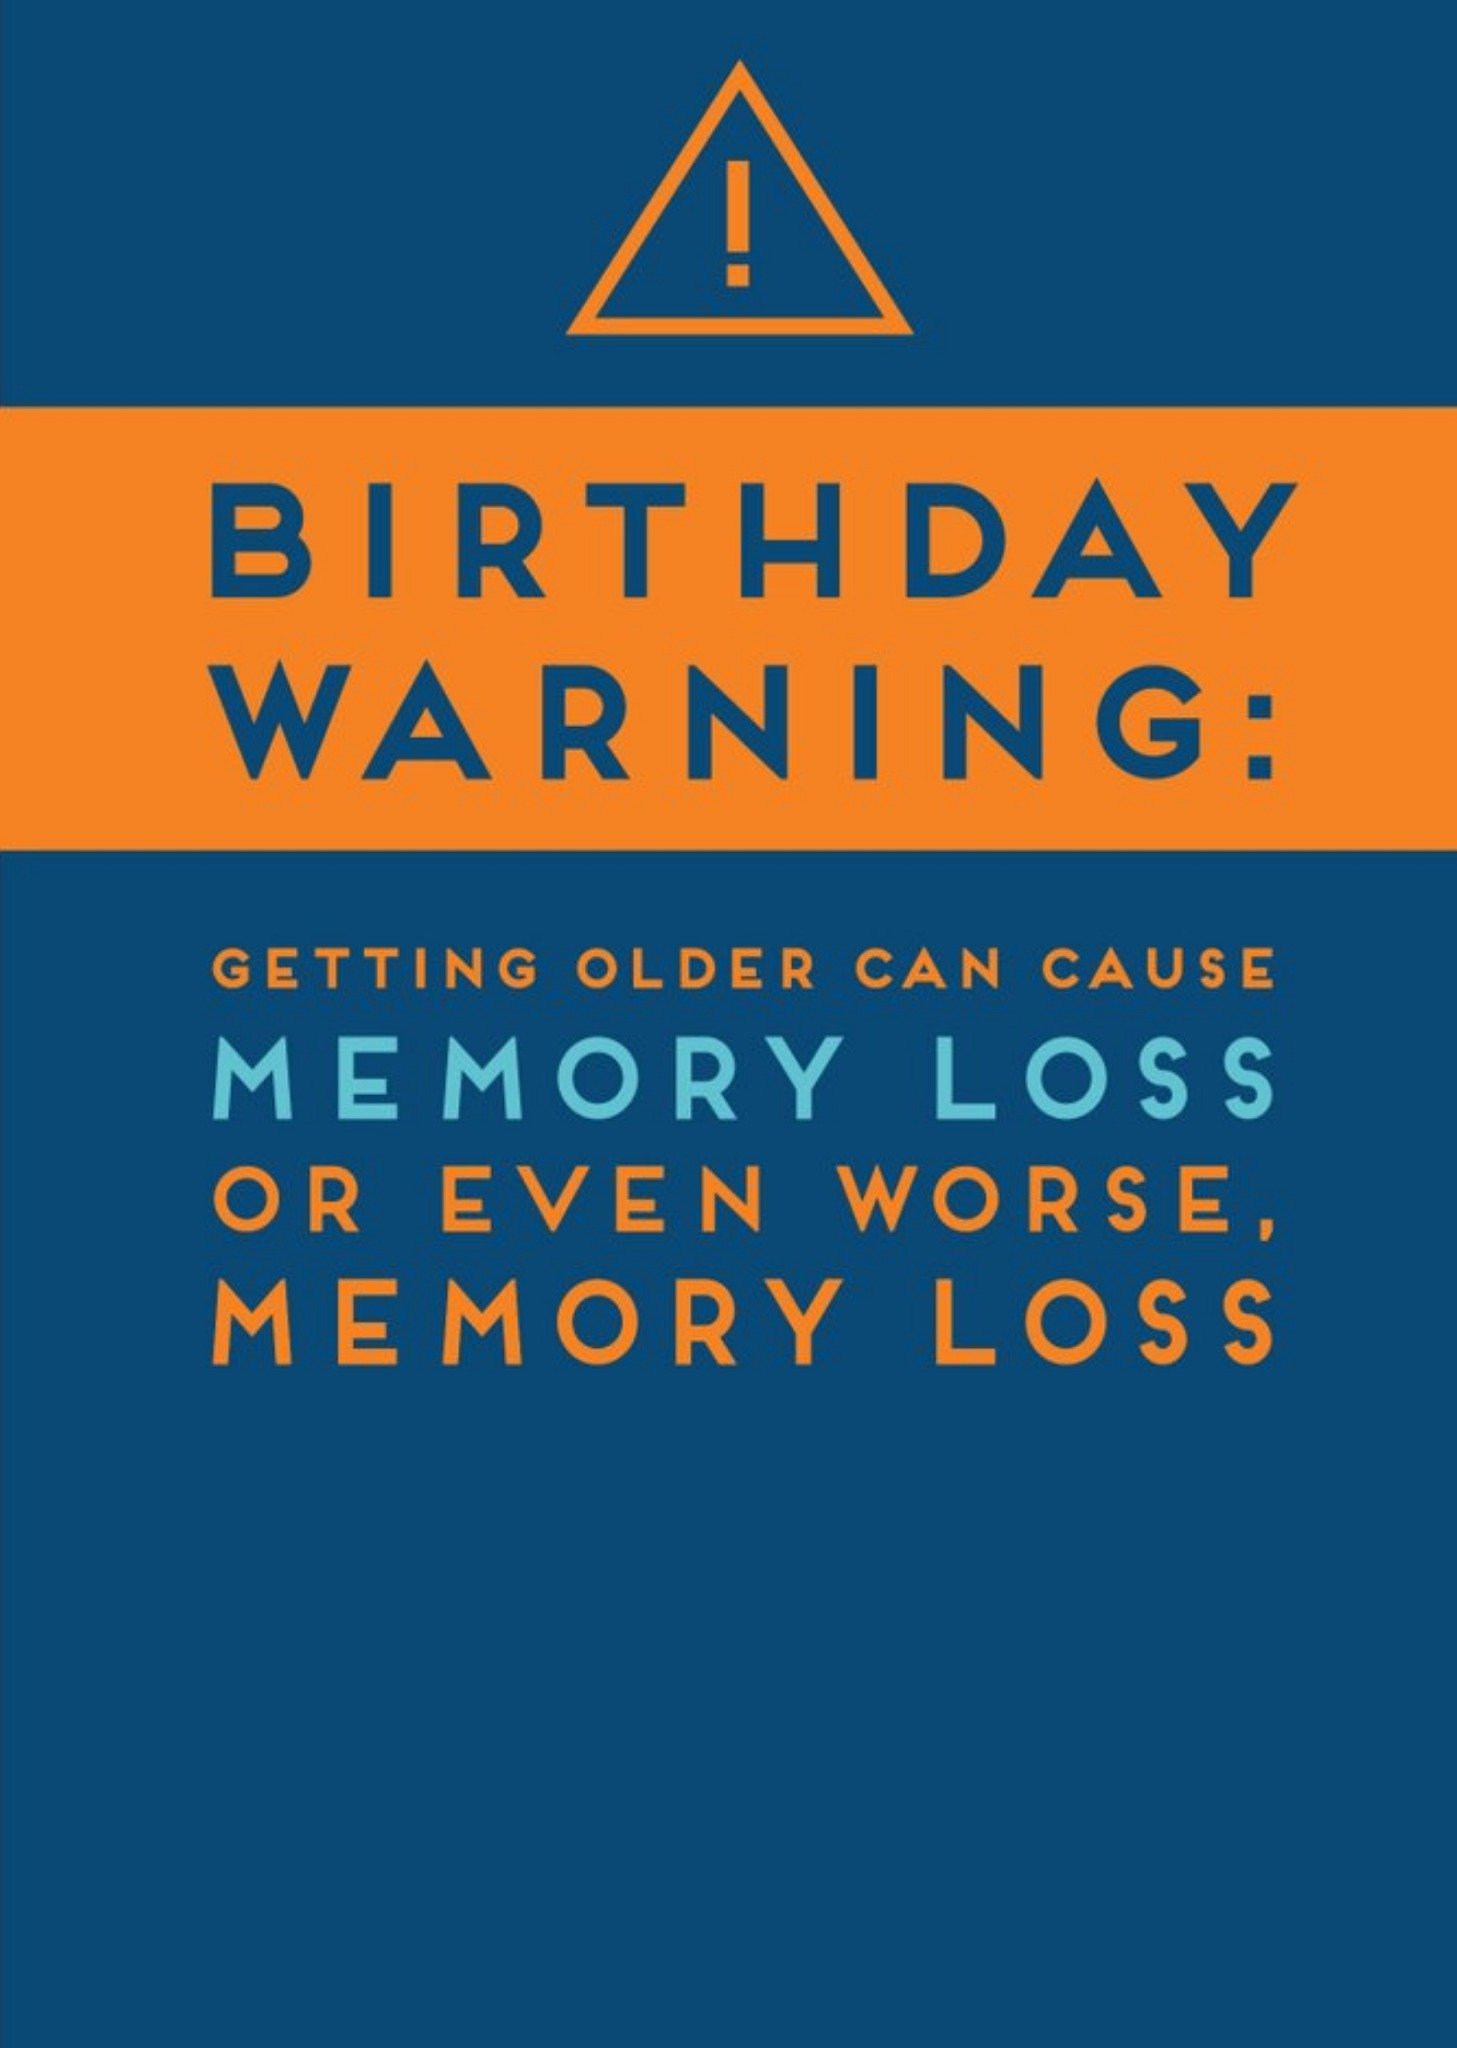 Moonpig Paperlink Birthday Warning Card, Large